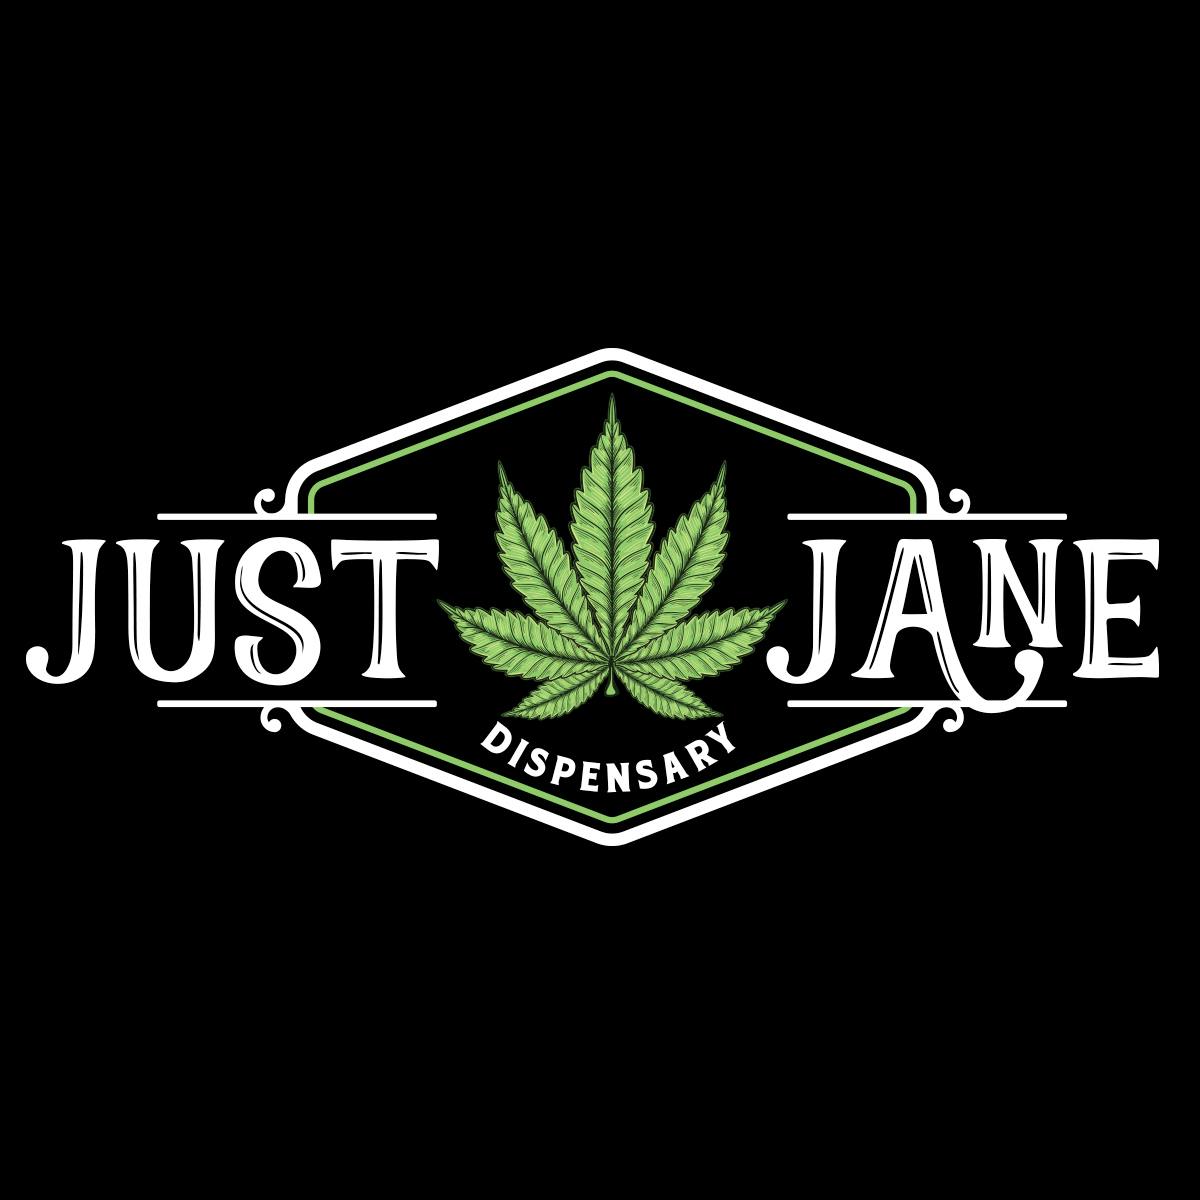 Just Jane Dispensary